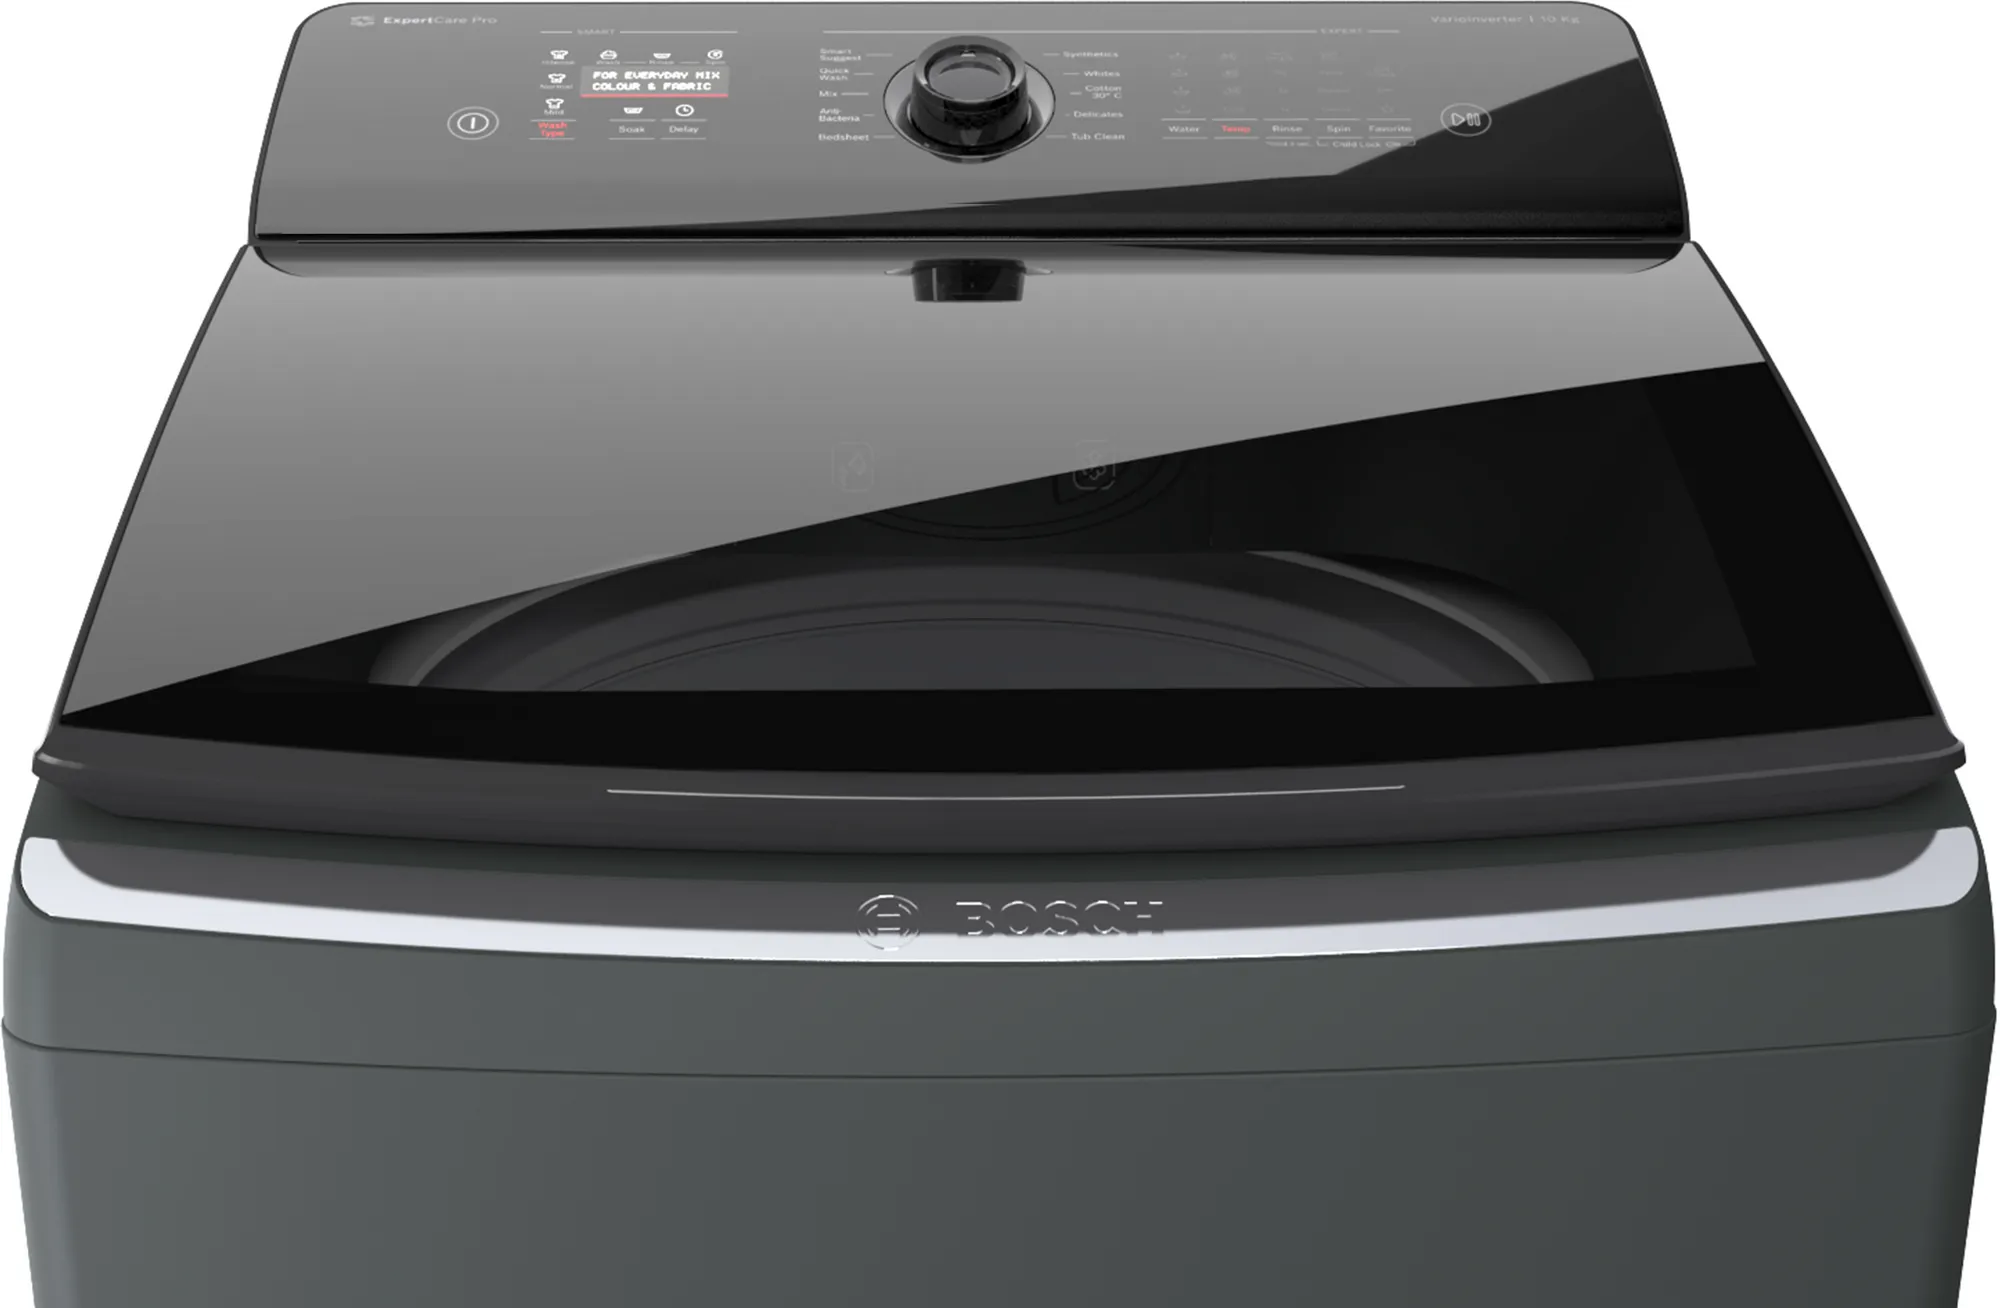 Bosch 10 Kg 5 Star Fully Automatic Top Load Washing Machine WOI105B0IN Series 6  Black